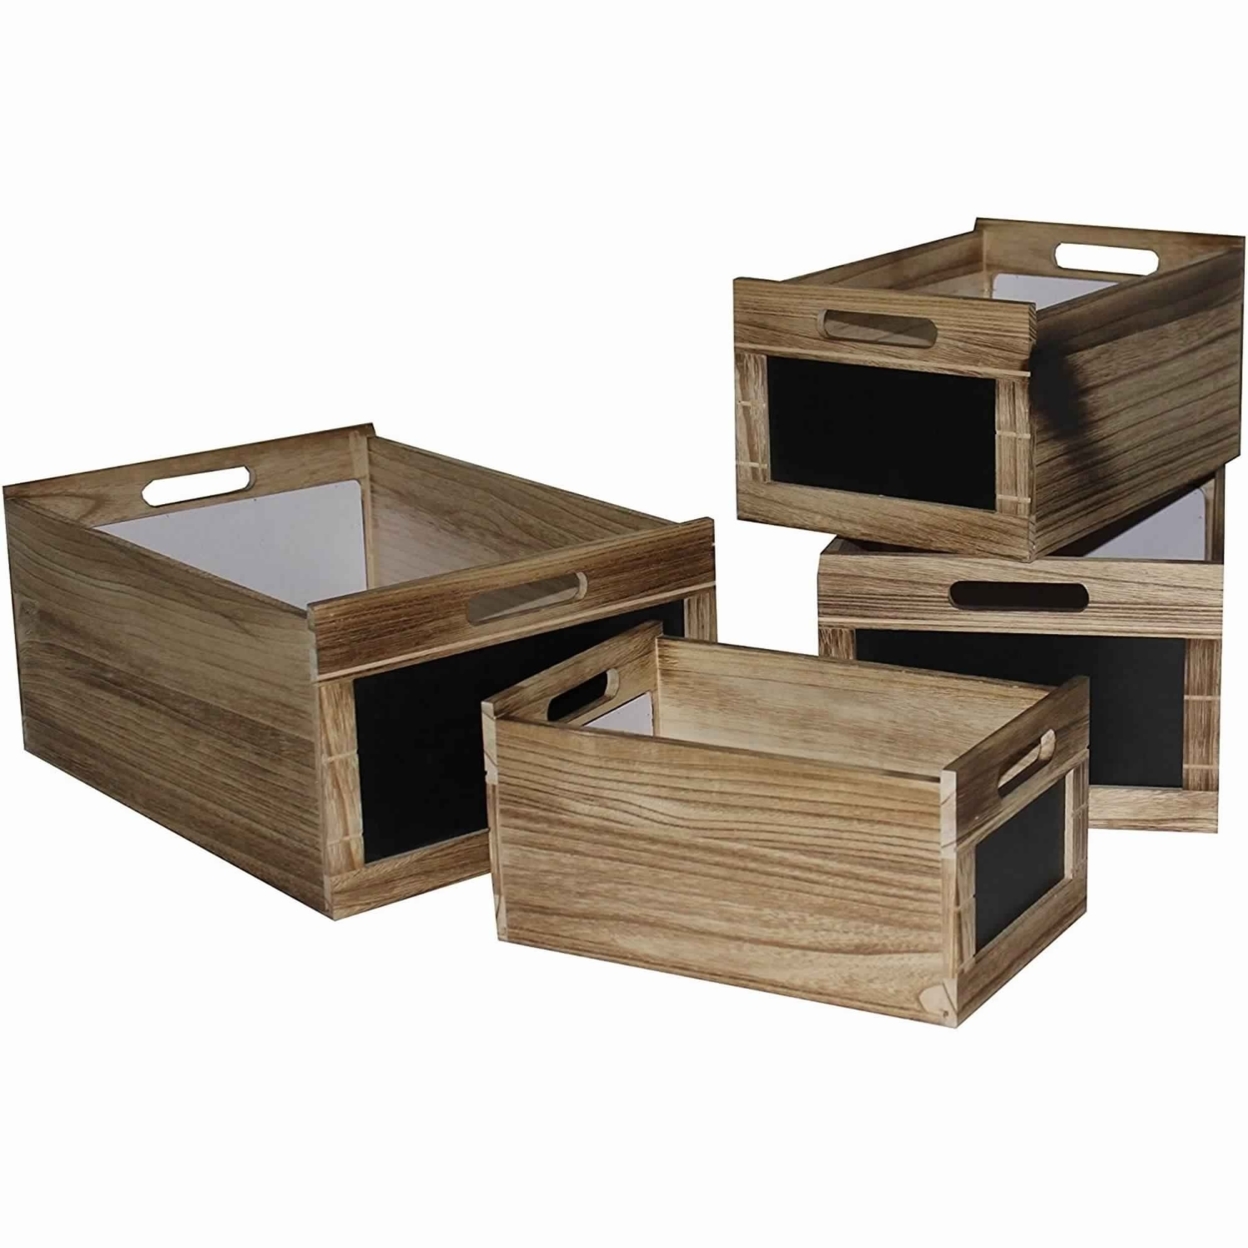 Chalkboard Inserted Wooden Storage Box With Cutout Handles, Set Of 4,Brown- Saltoro Sherpi